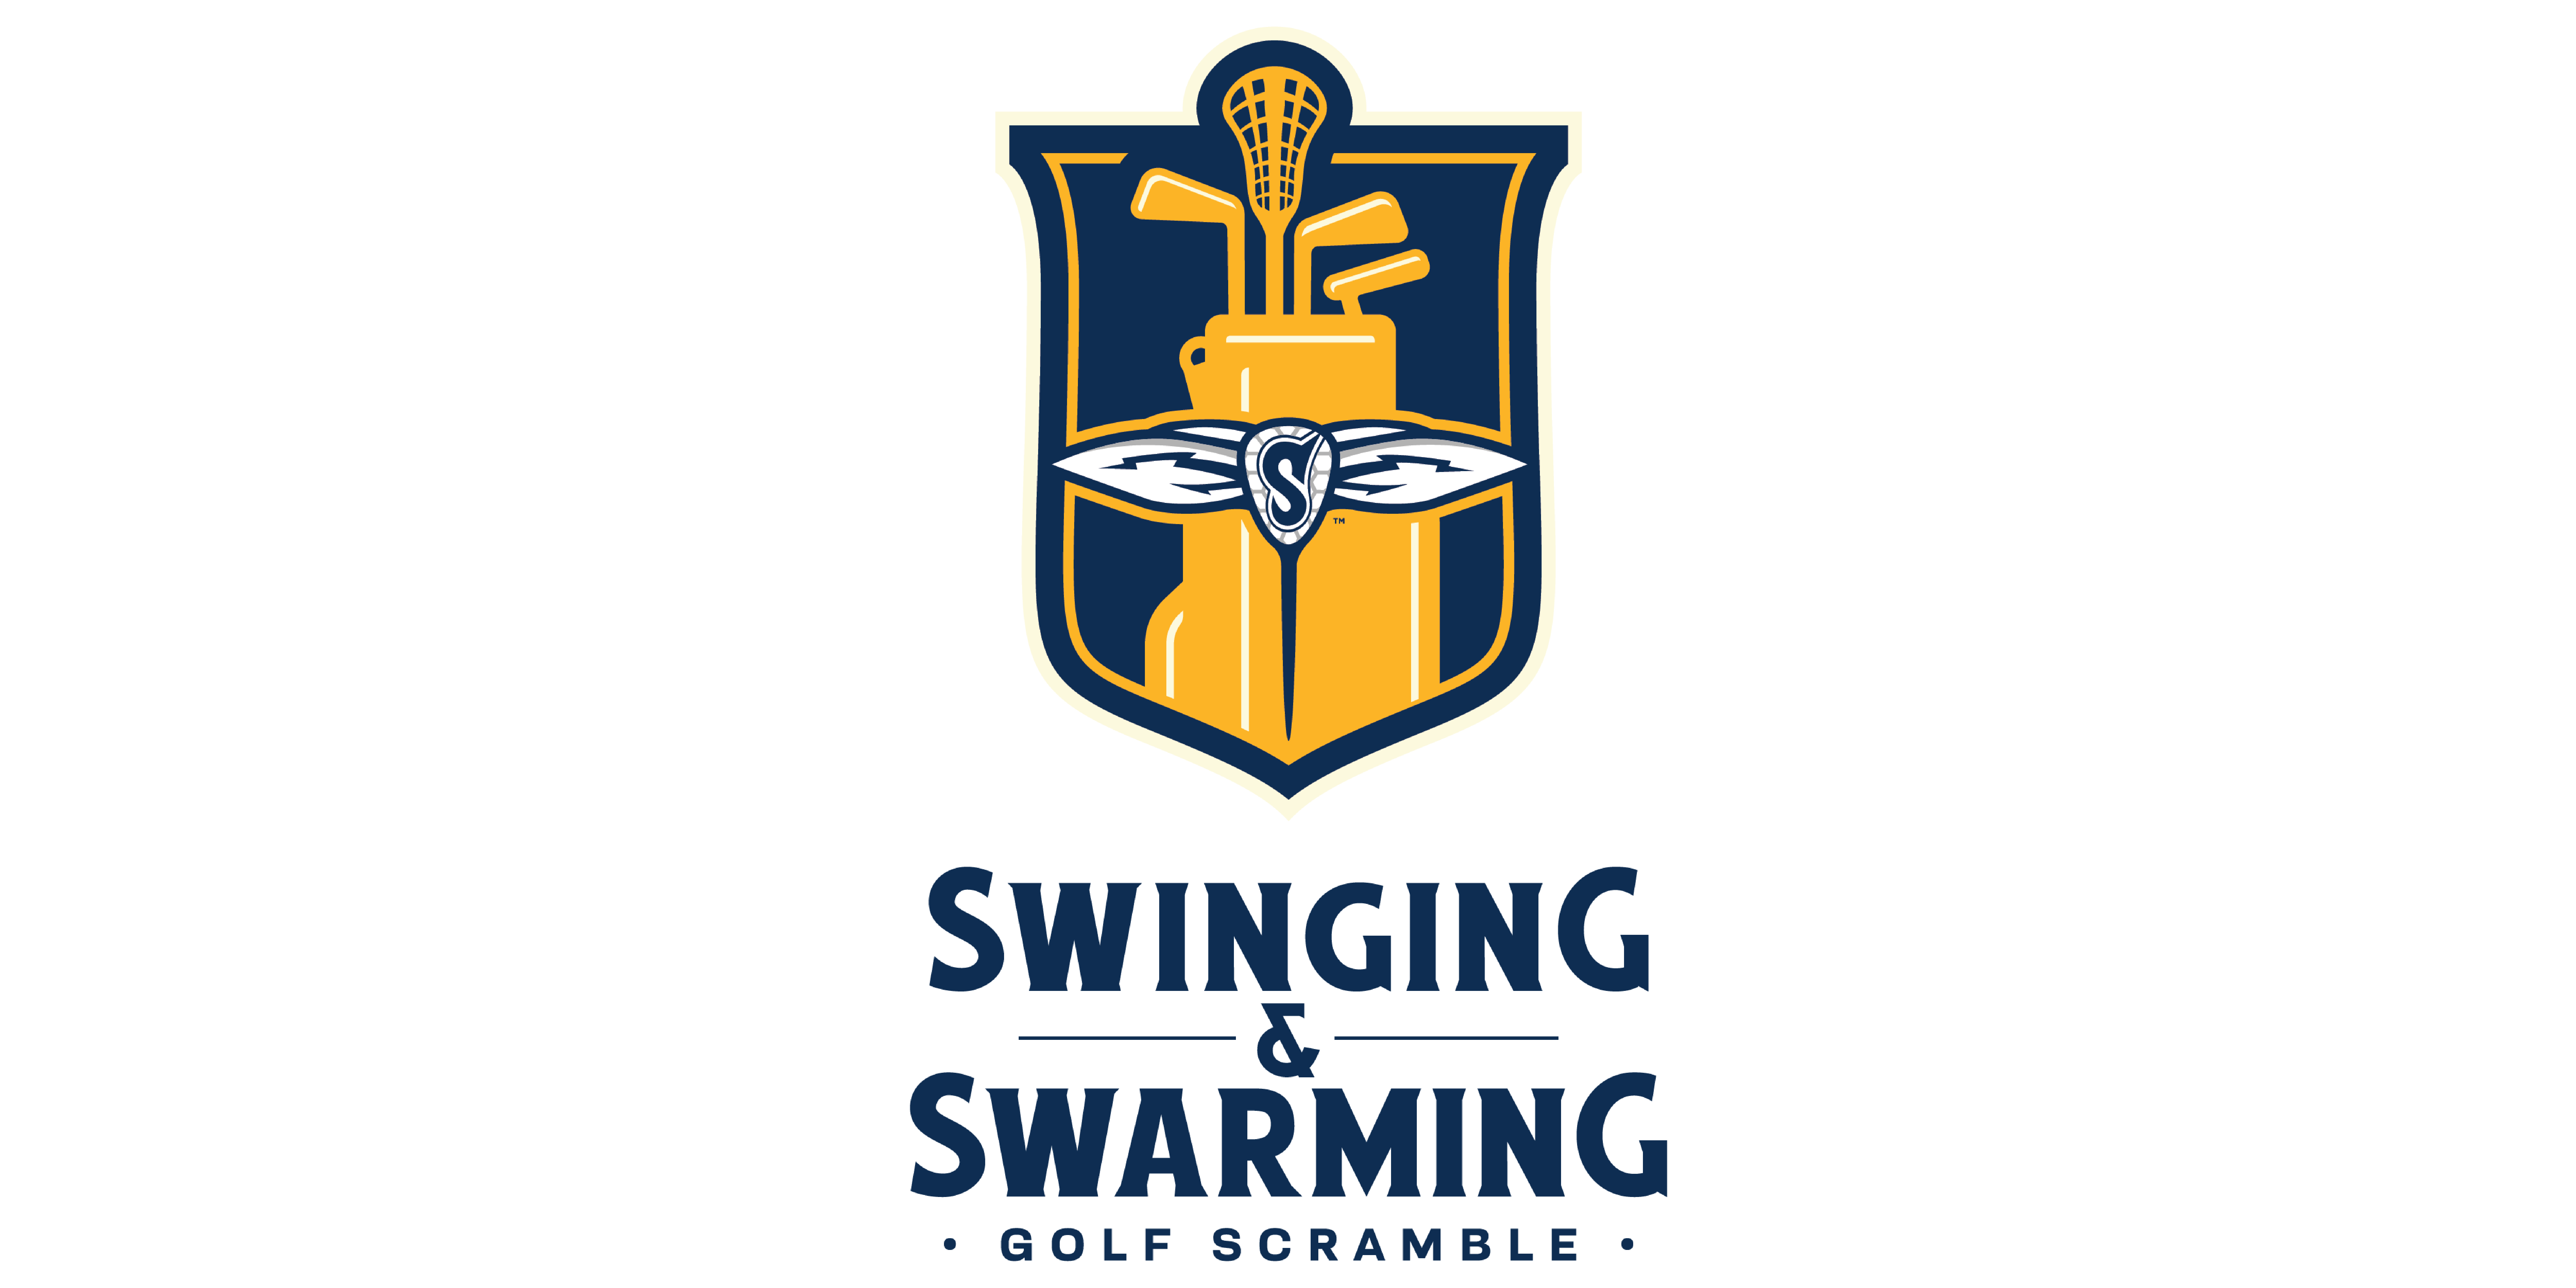 Swinging & Swarming Golf Scramble